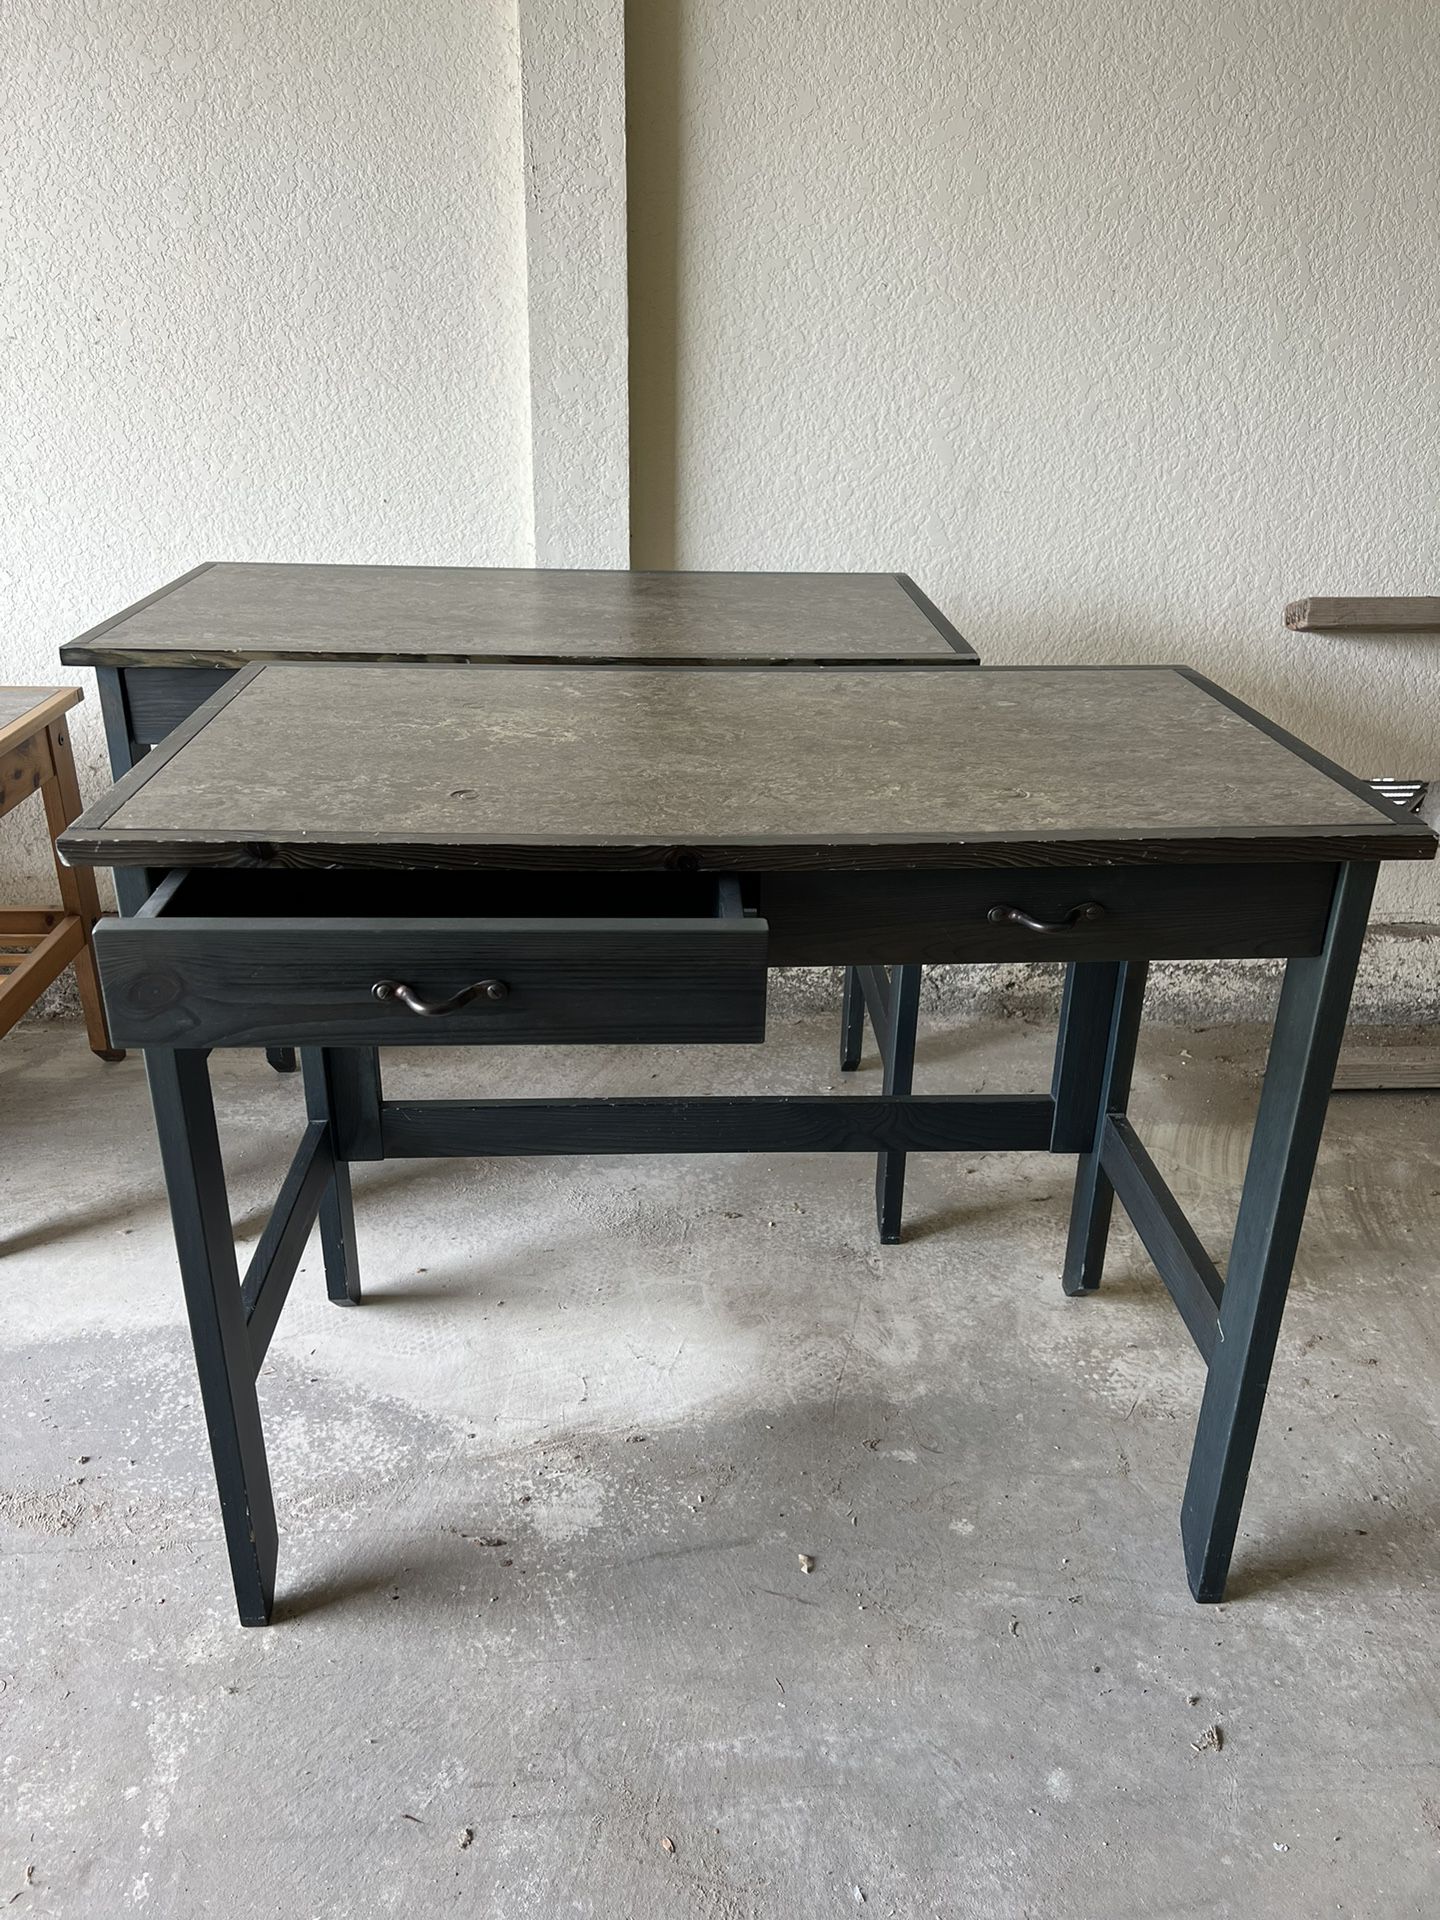 Vintage IKEA Desk Tables ($10 Each) 